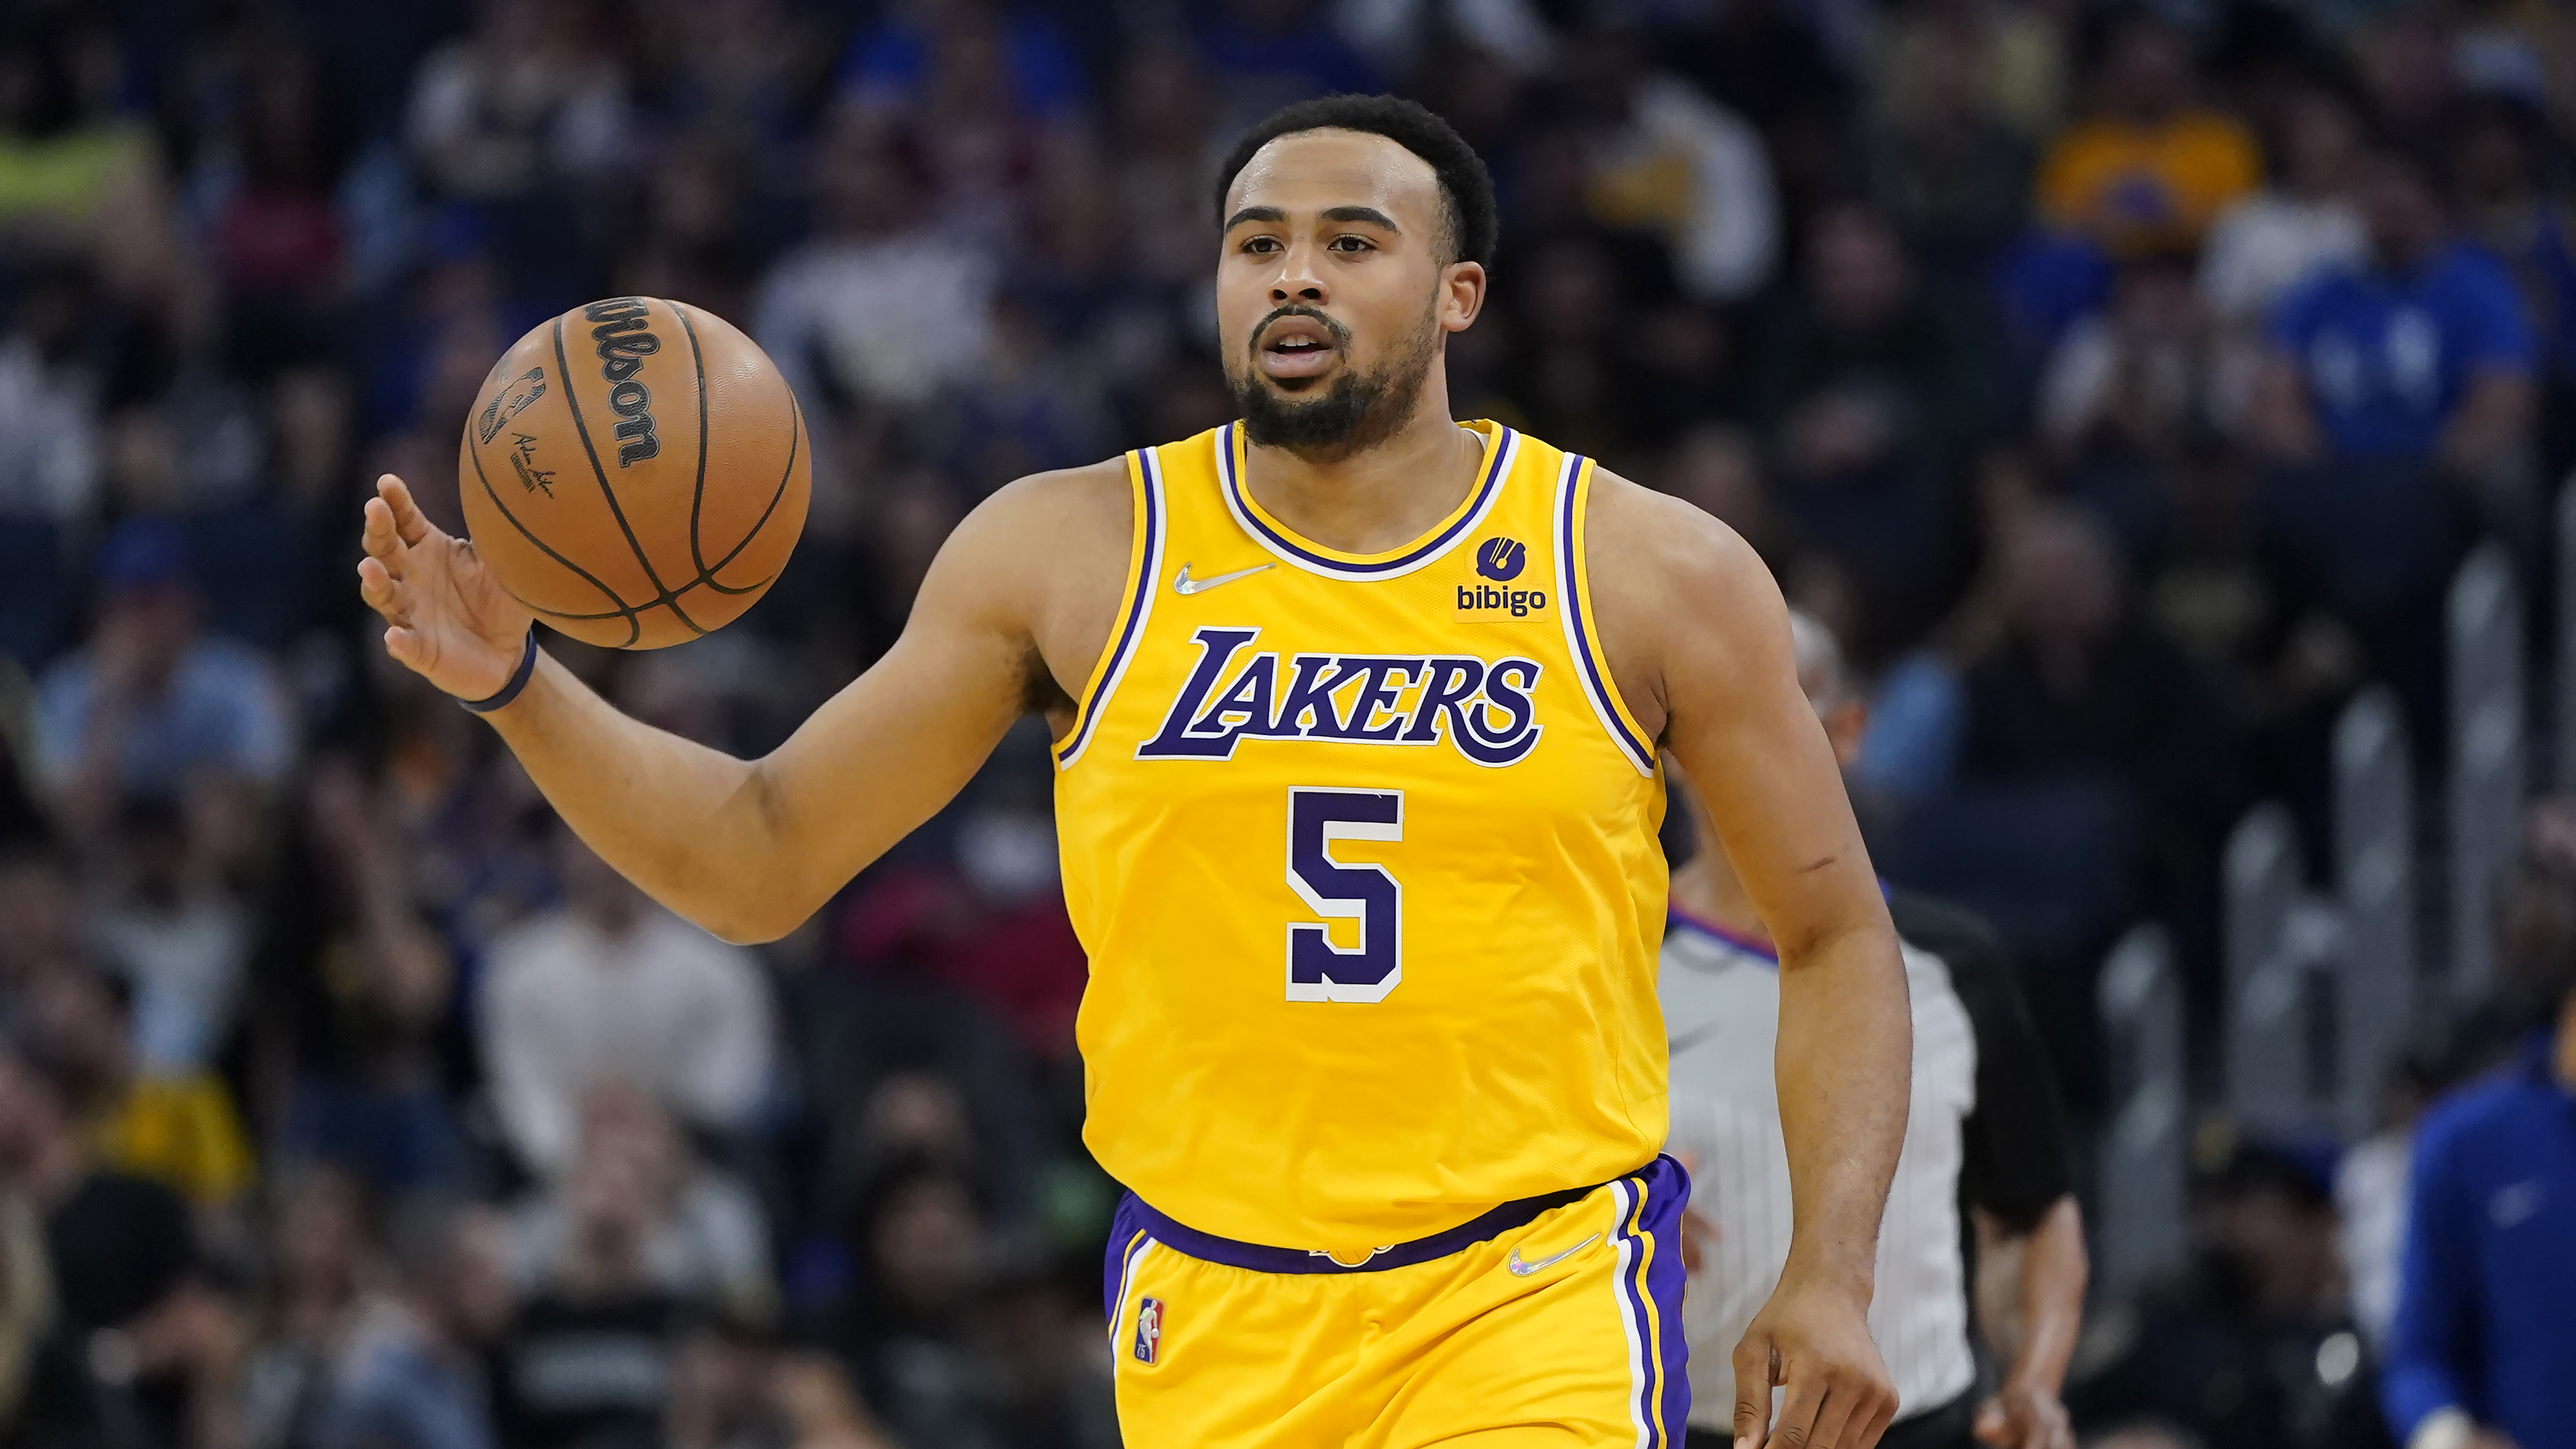 Report: Jazz trading Beverley to Lakers for Horton-Tucker, Johnson